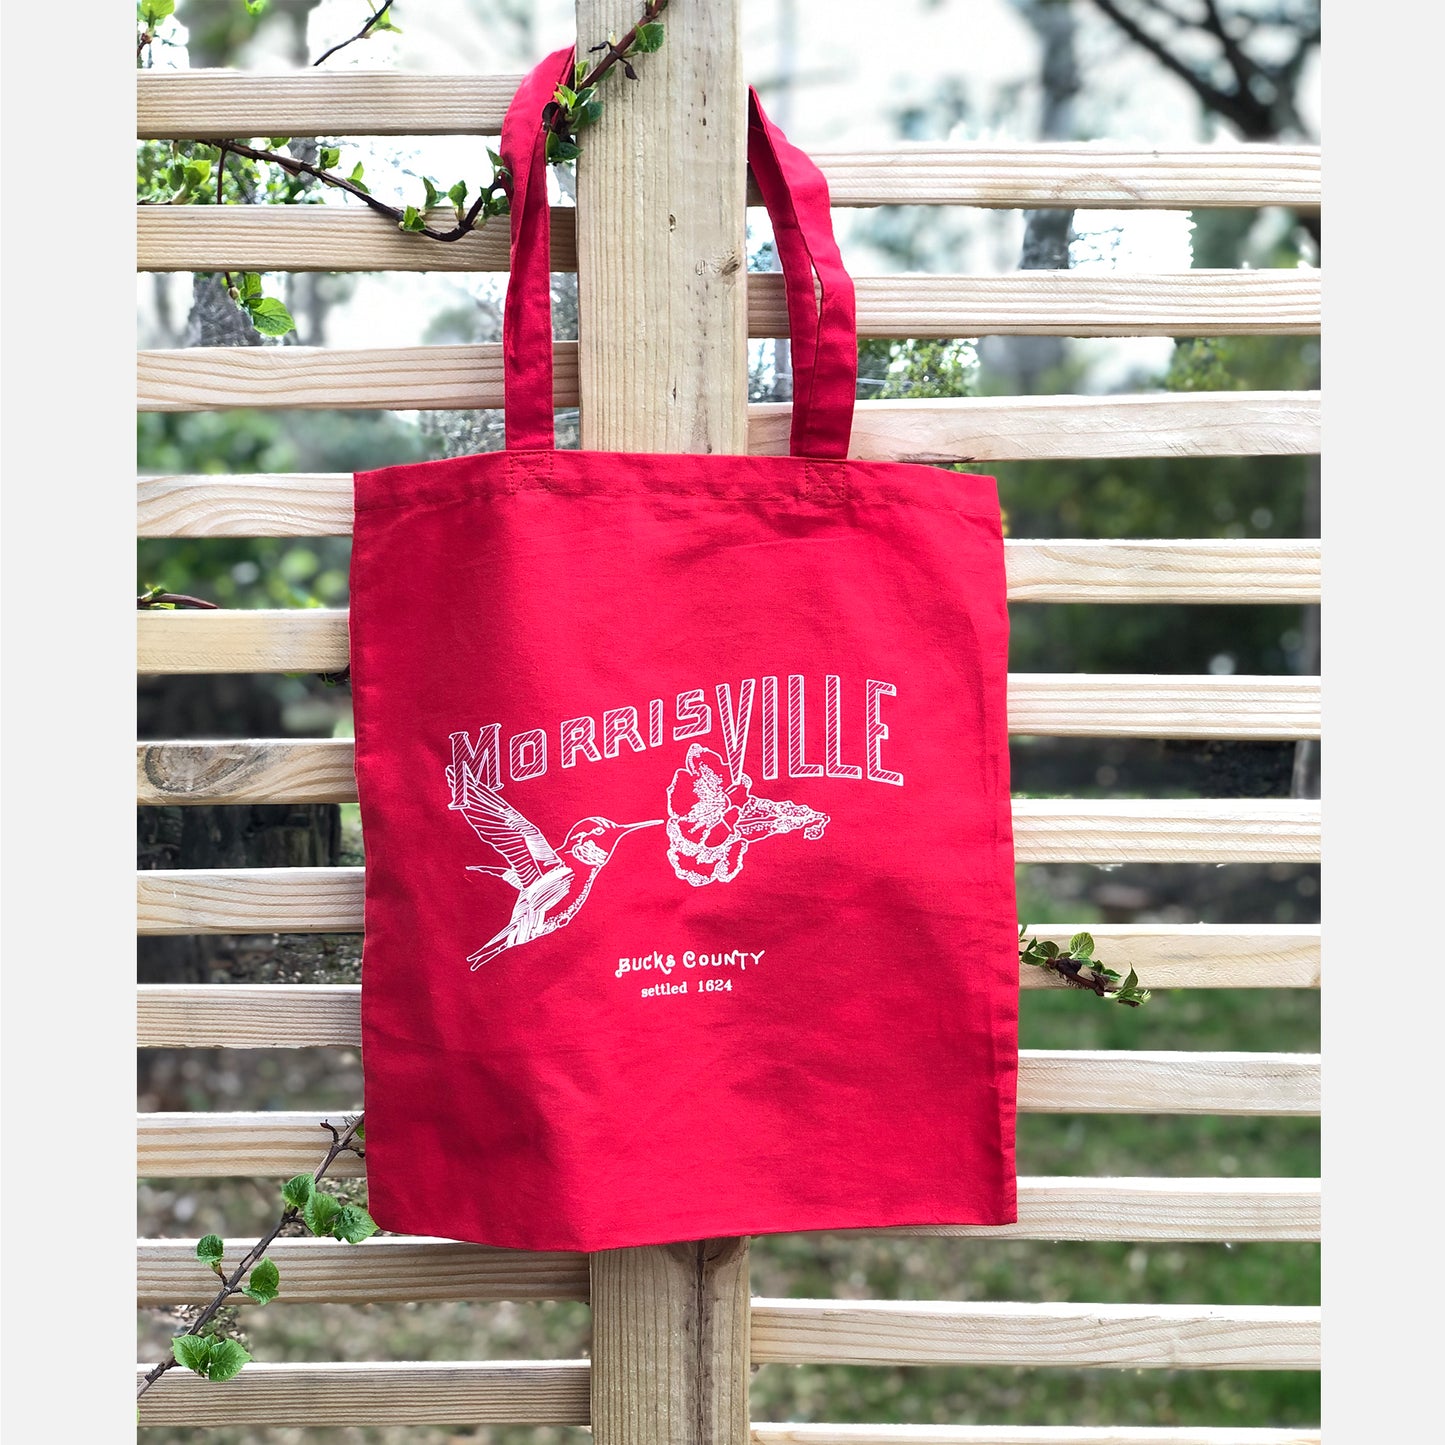 Hummingbird / Morrisville - canvas tote bag - 8oz red